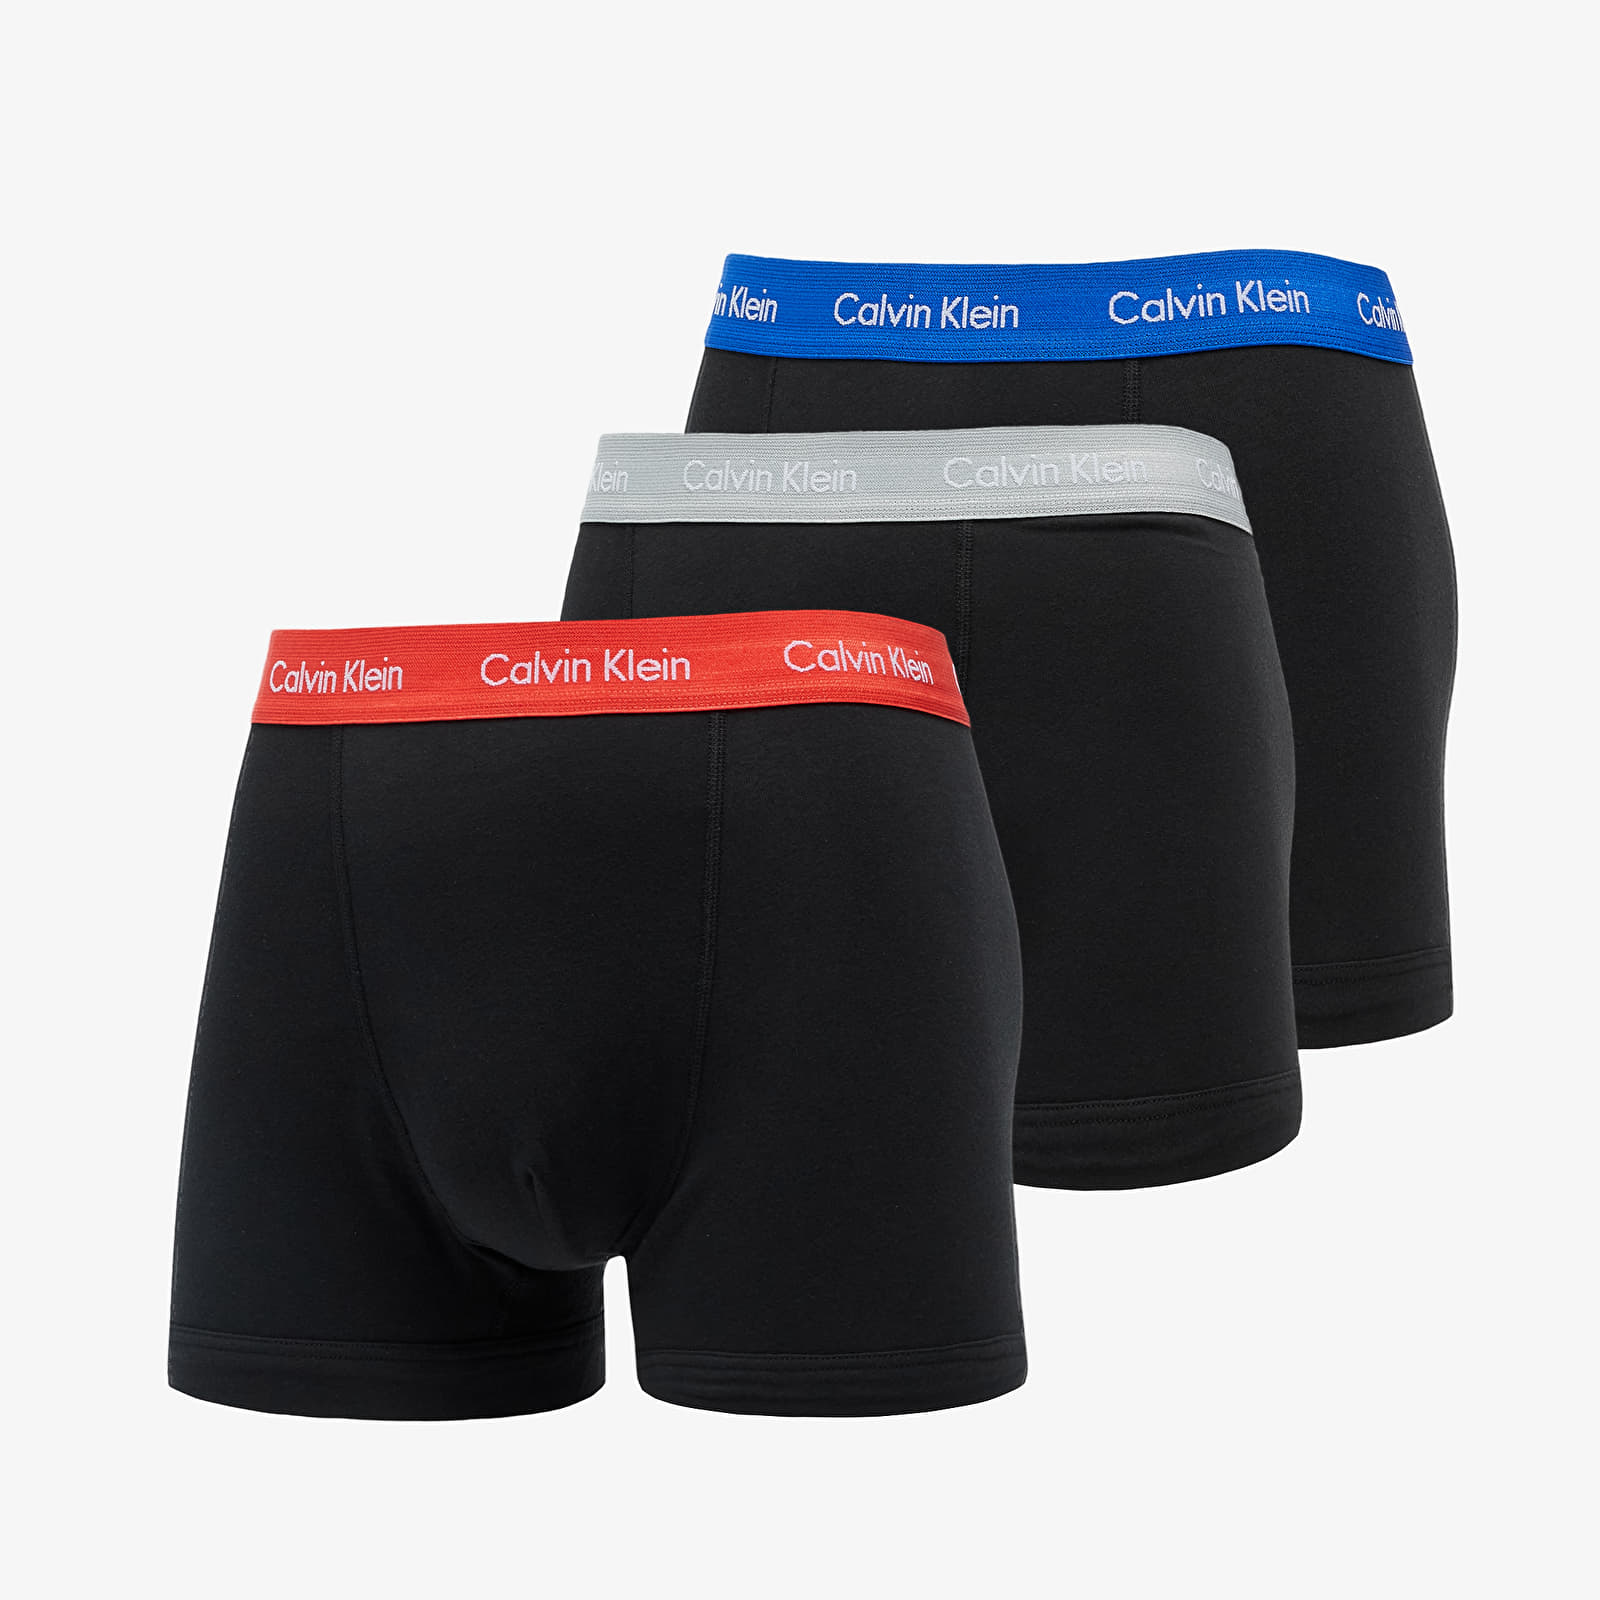 Boxer shorts Calvin Klein Cotton Stretch Trunk 3Pk Blue Royalty/ Grey/ Exotic Coral